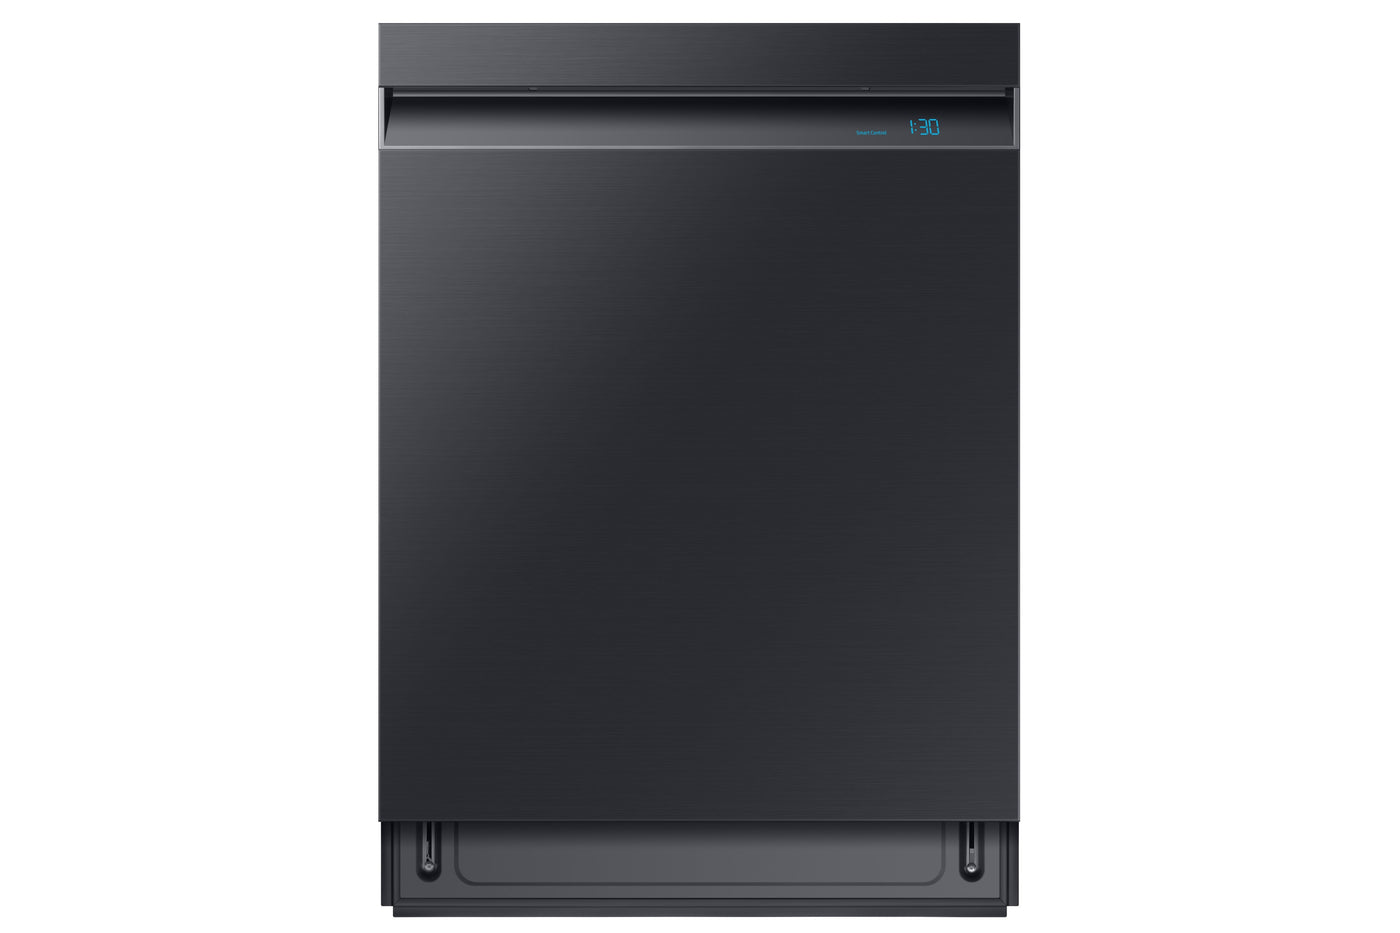 sears black stainless steel dishwasher